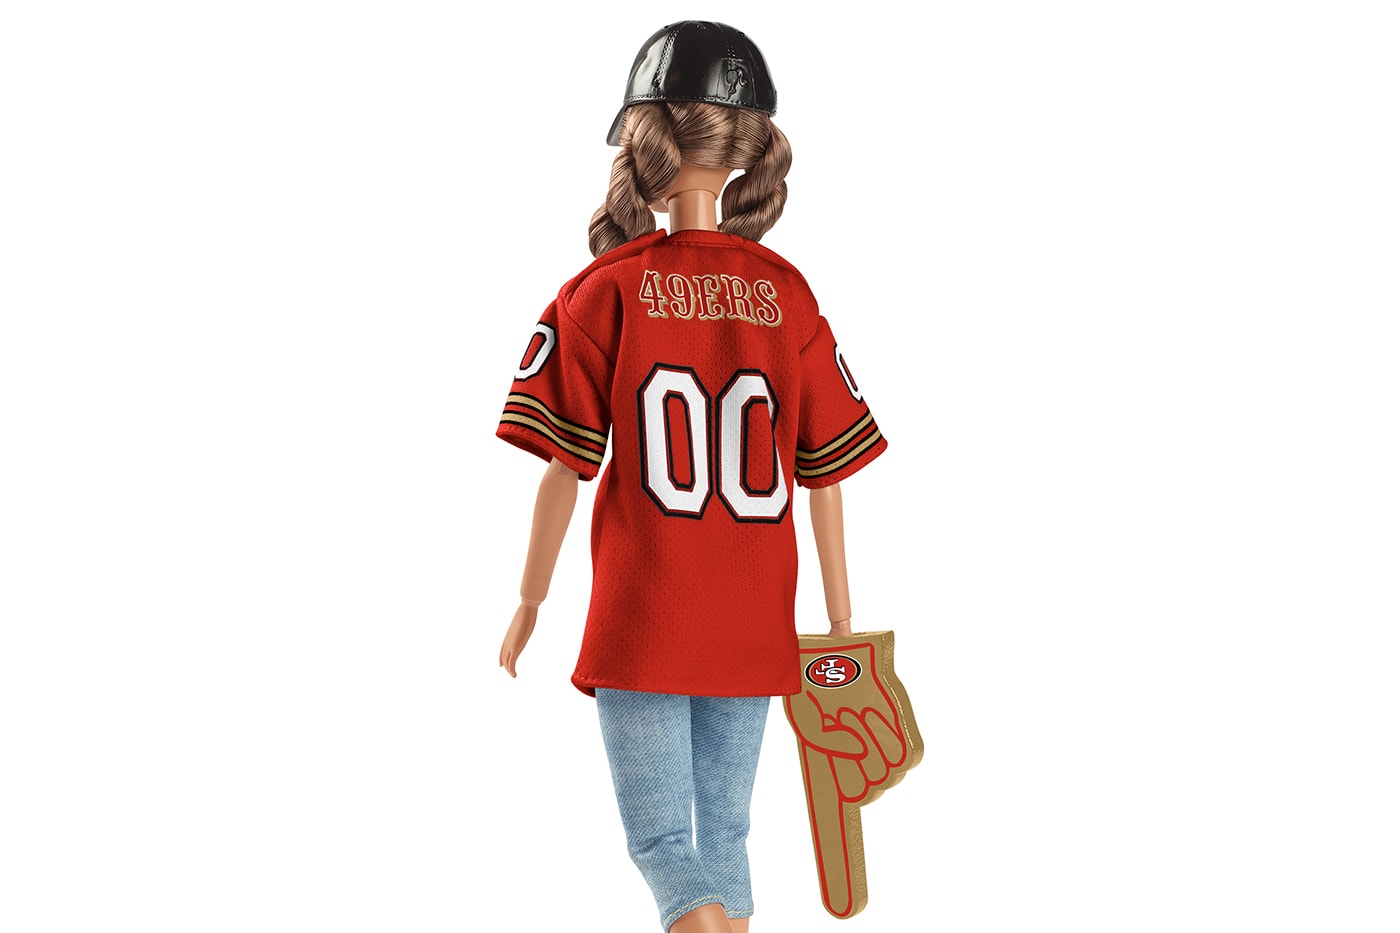 Mattel Super Bowl LVIII Barbie Limited Edition Info